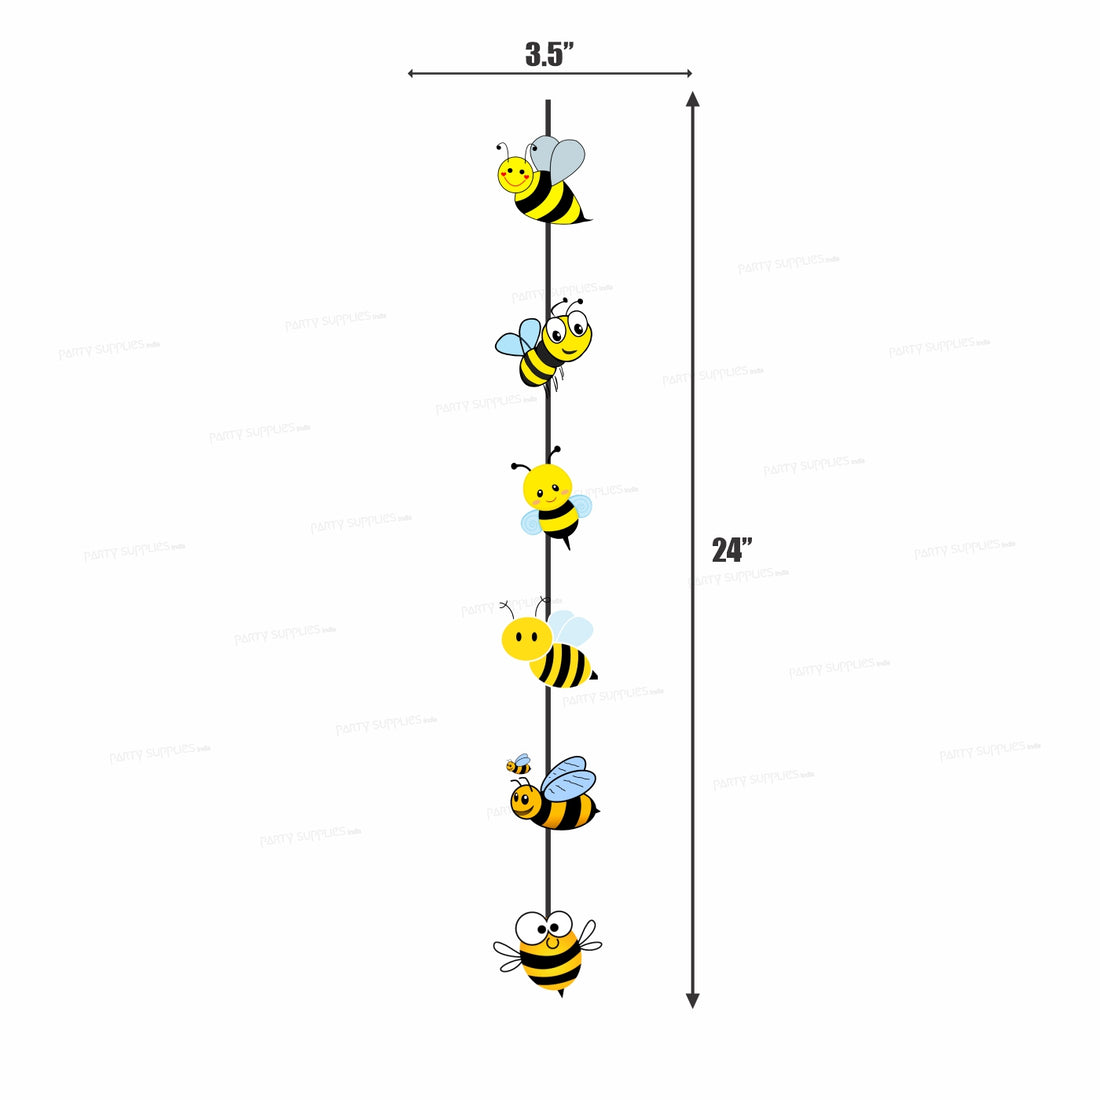 PSI Bumble Bee Theme Dangler